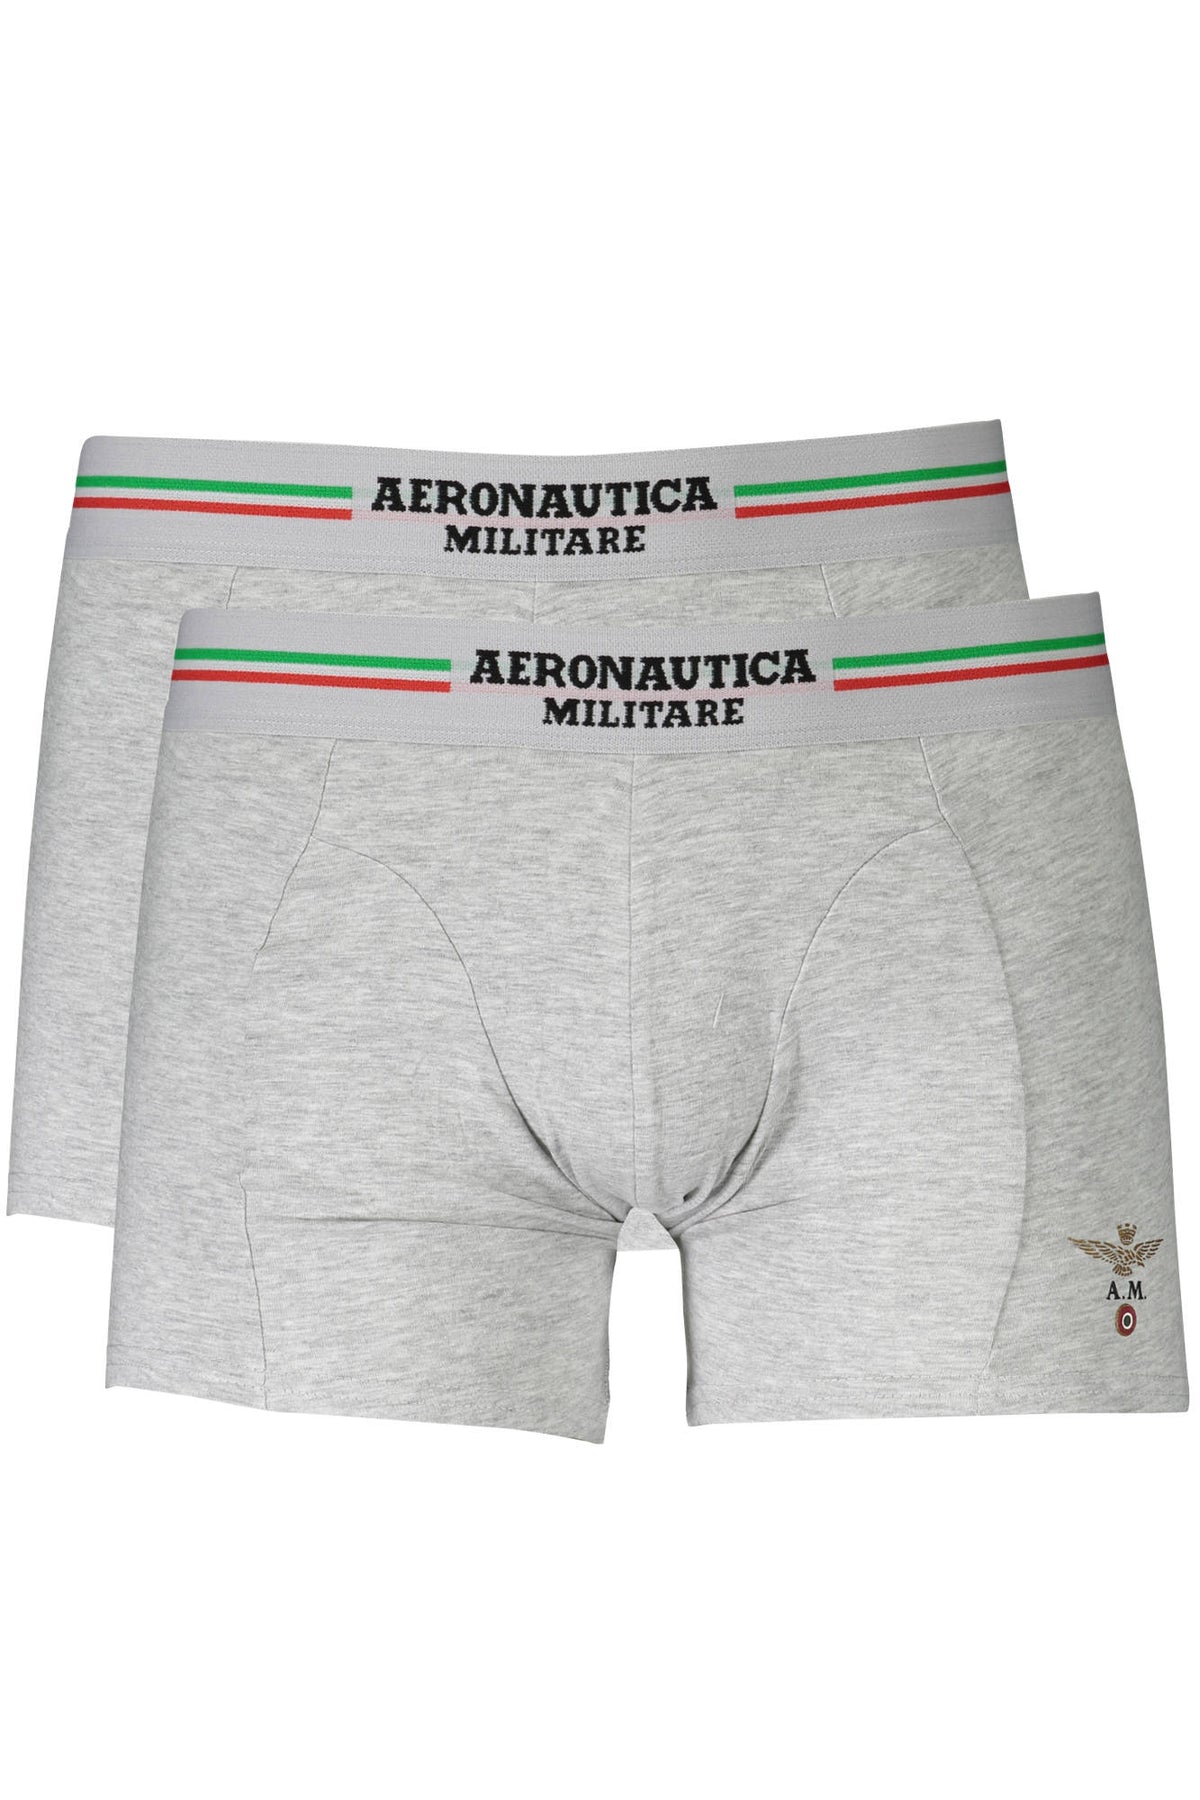 AERONAUTICA MILITARE Herren Boxershort Boxer Unterhose Unterwäsche